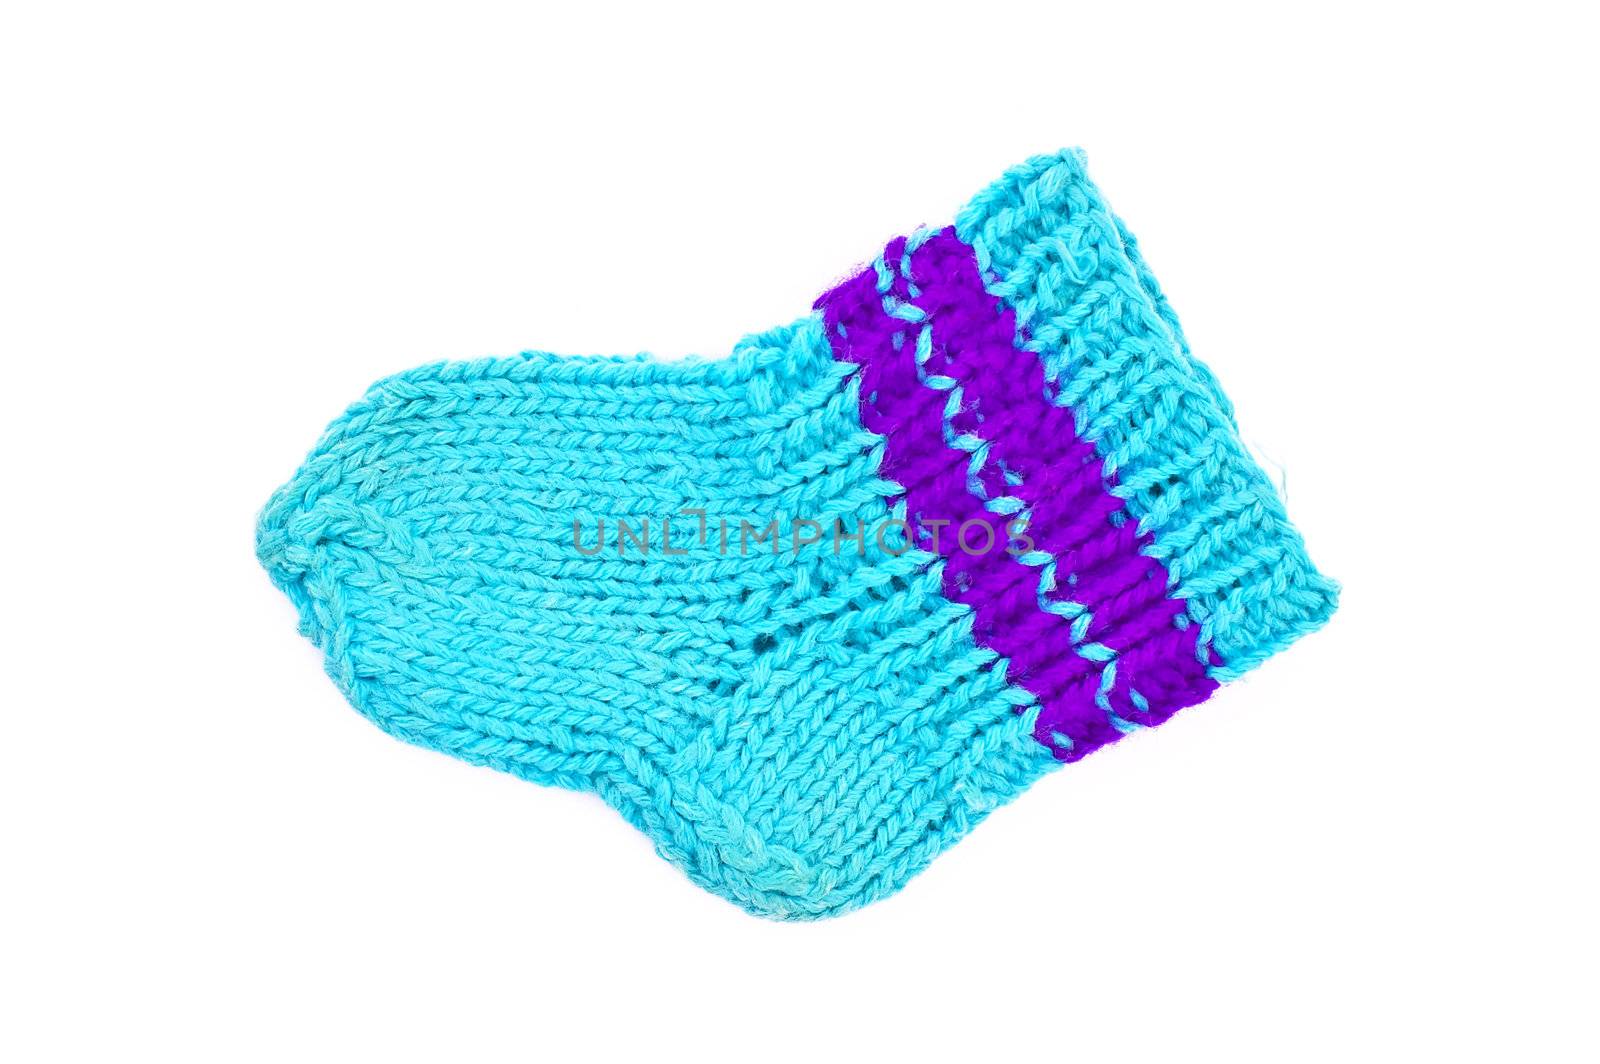 Knitted blue socks by rezkrr